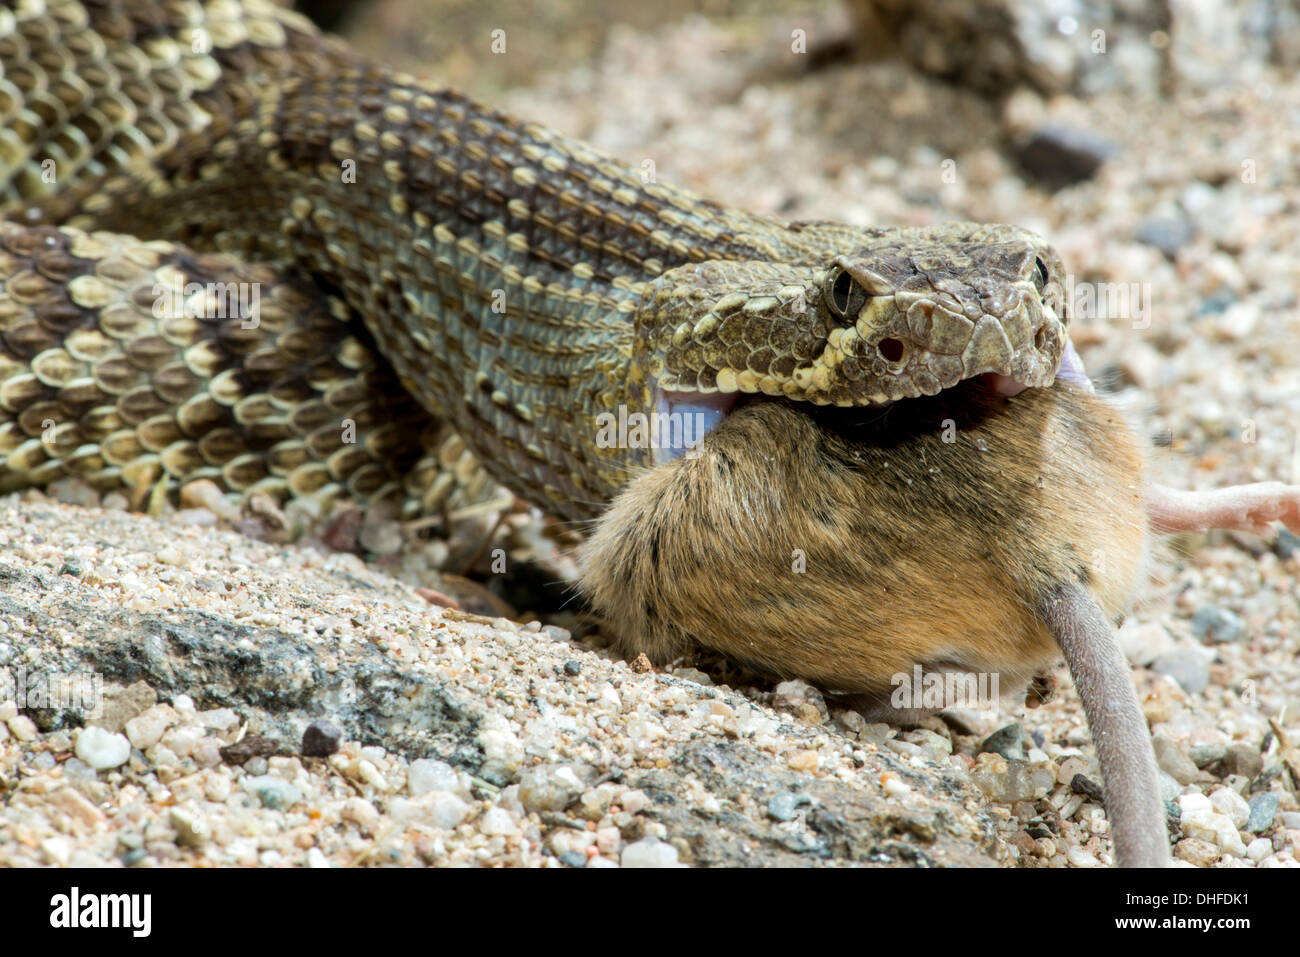 Mohave-Klapperschlange Essen ein Kaktus Maus Crotalus Scutulatus & Peromyscus eremicus Stockfoto